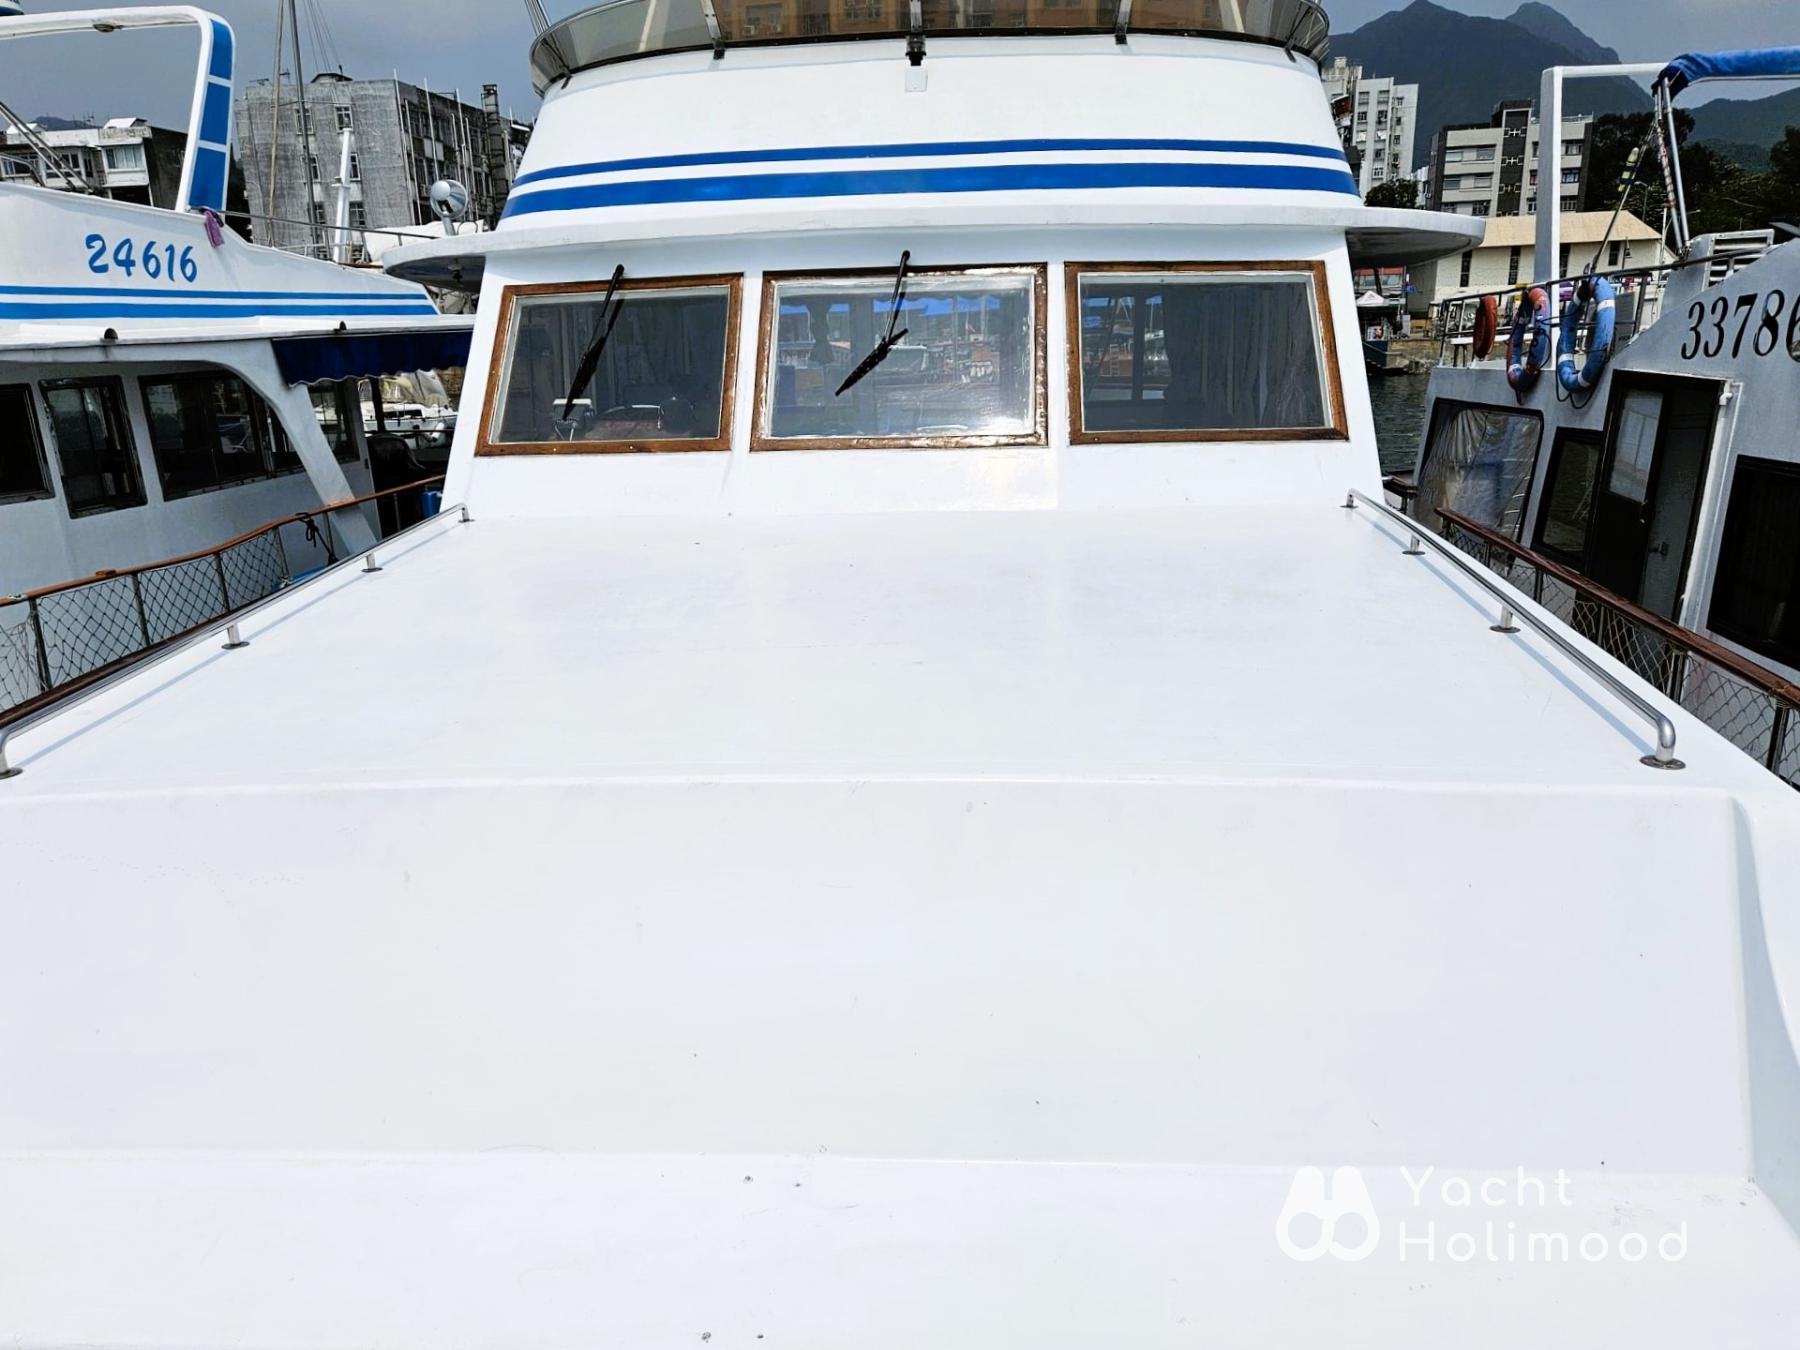 WK02 Sai Kung Night Charter Junk Boat  7